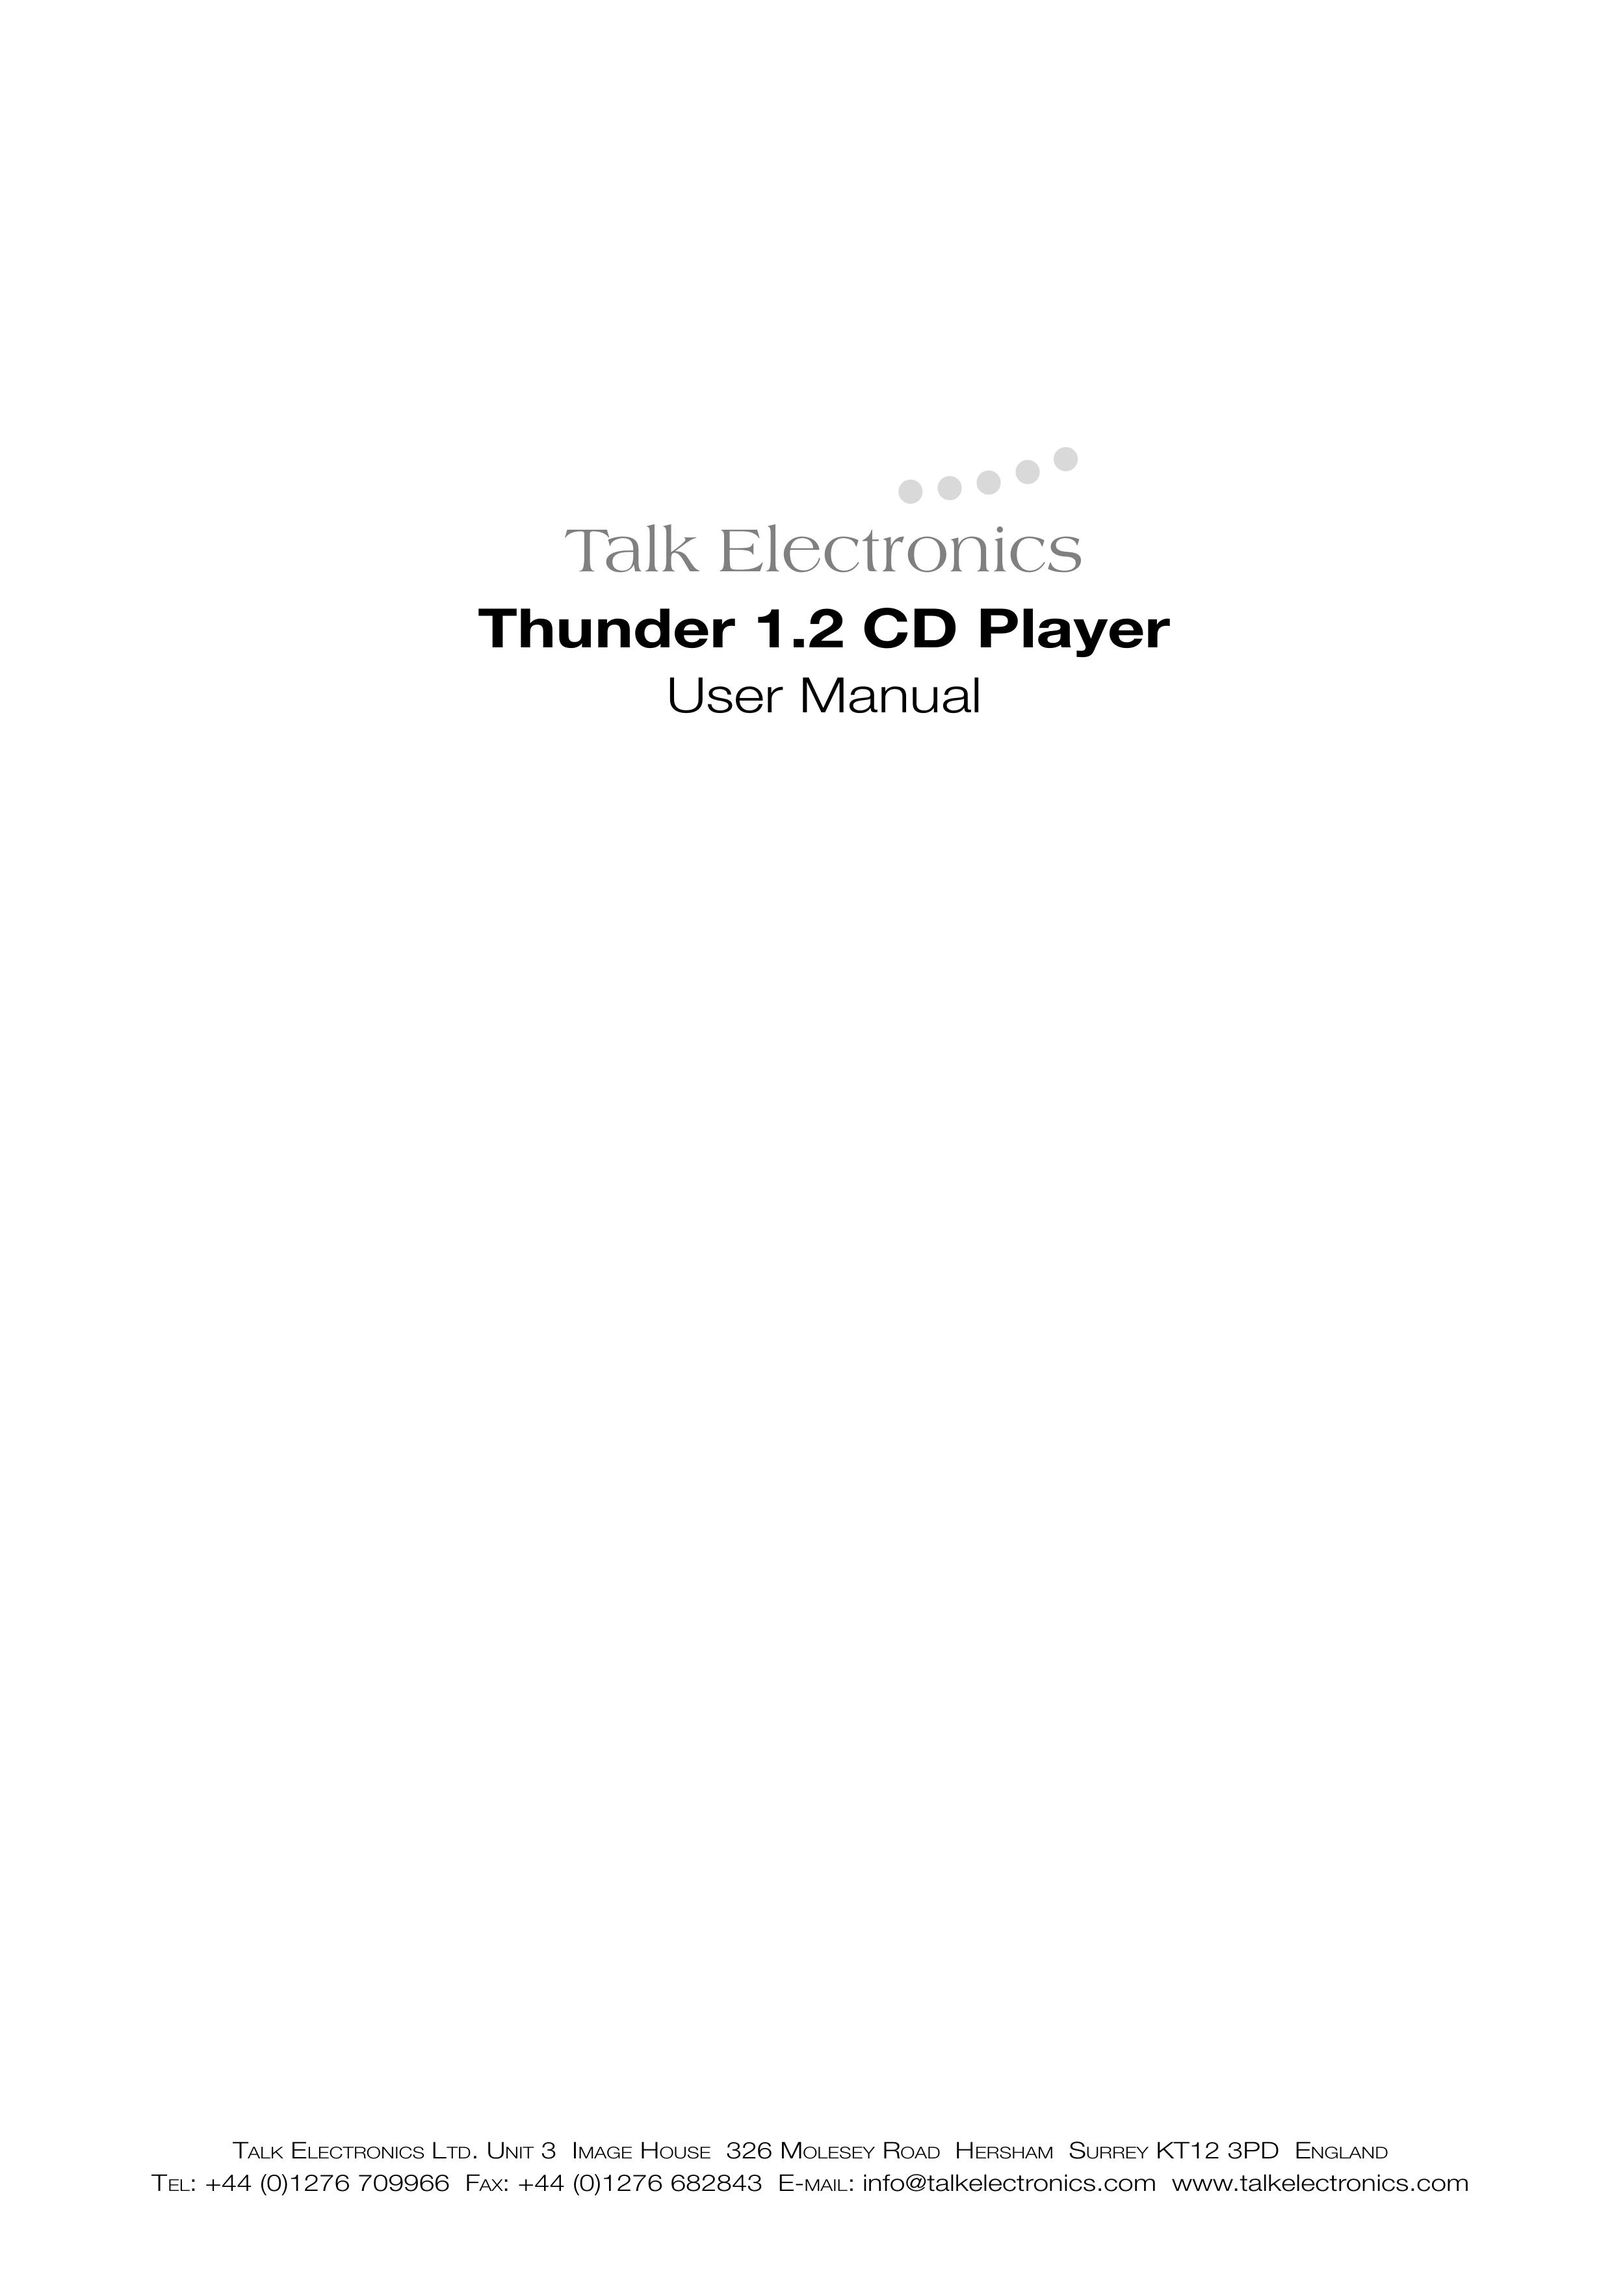 Talk electronic Thunder 1.2 CD Player User Manual